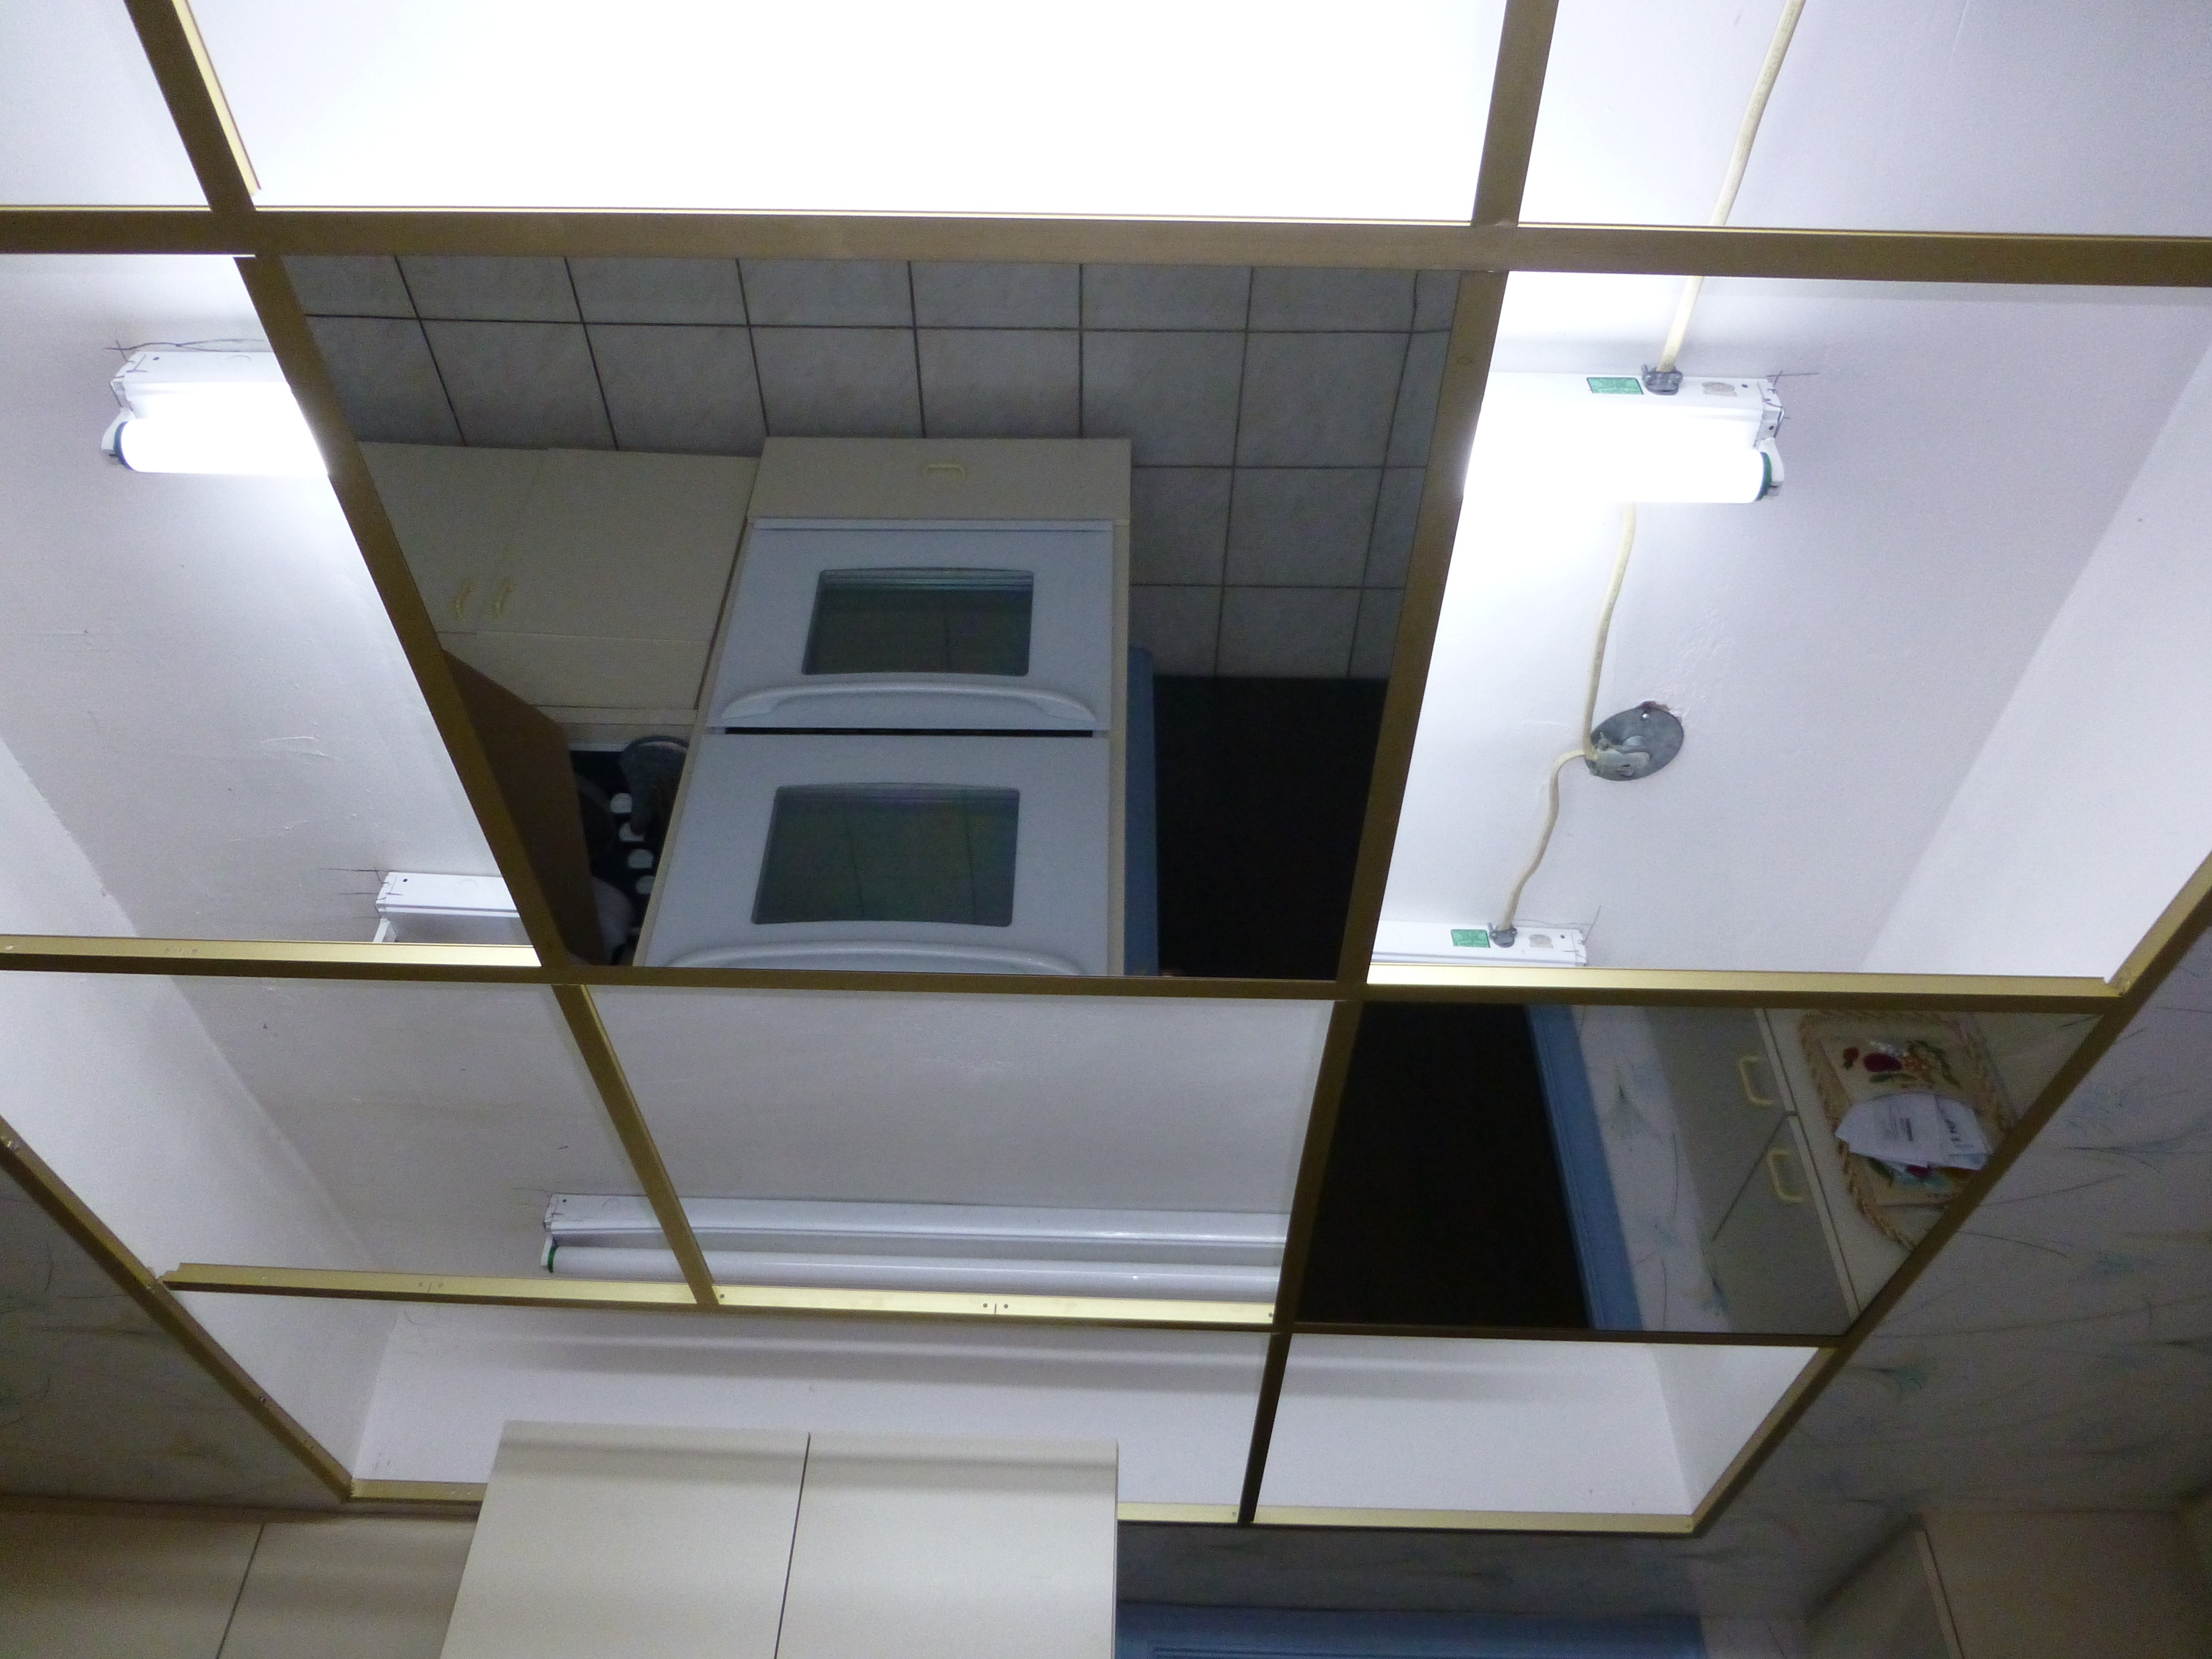 Reflective Drop Ceiling Tiles